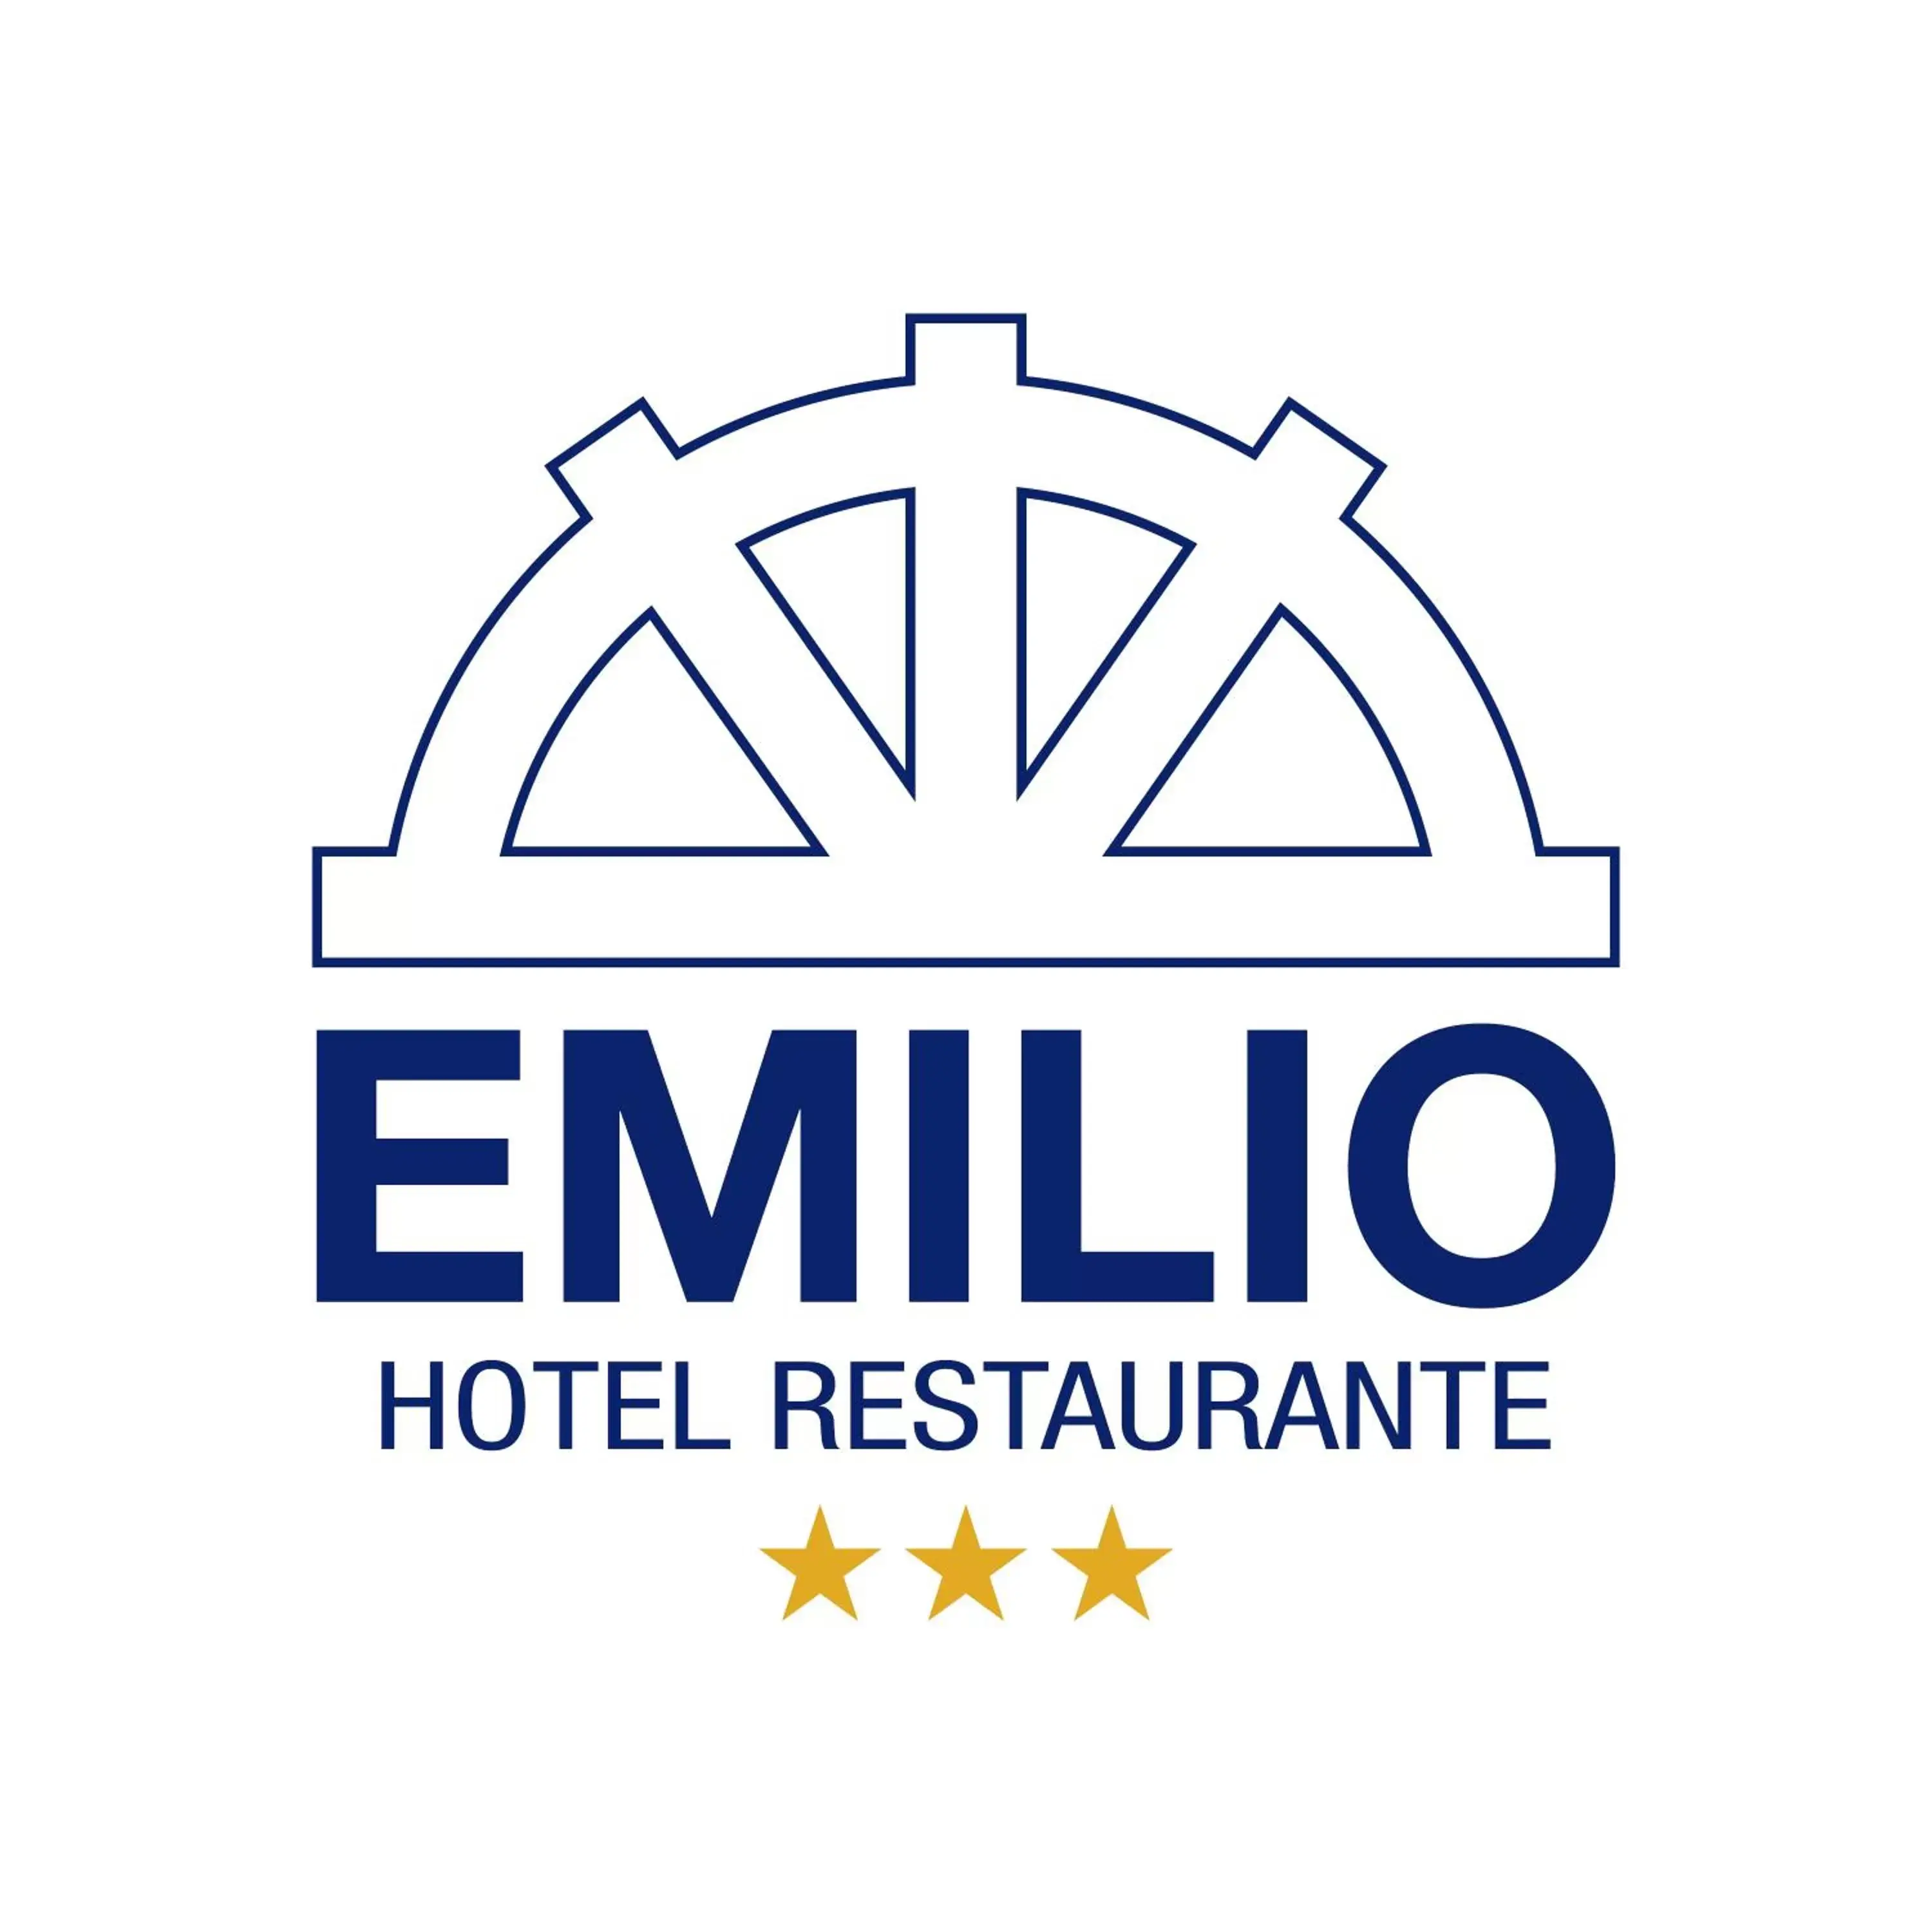 Property logo or sign in Hotel Restaurante Emilio